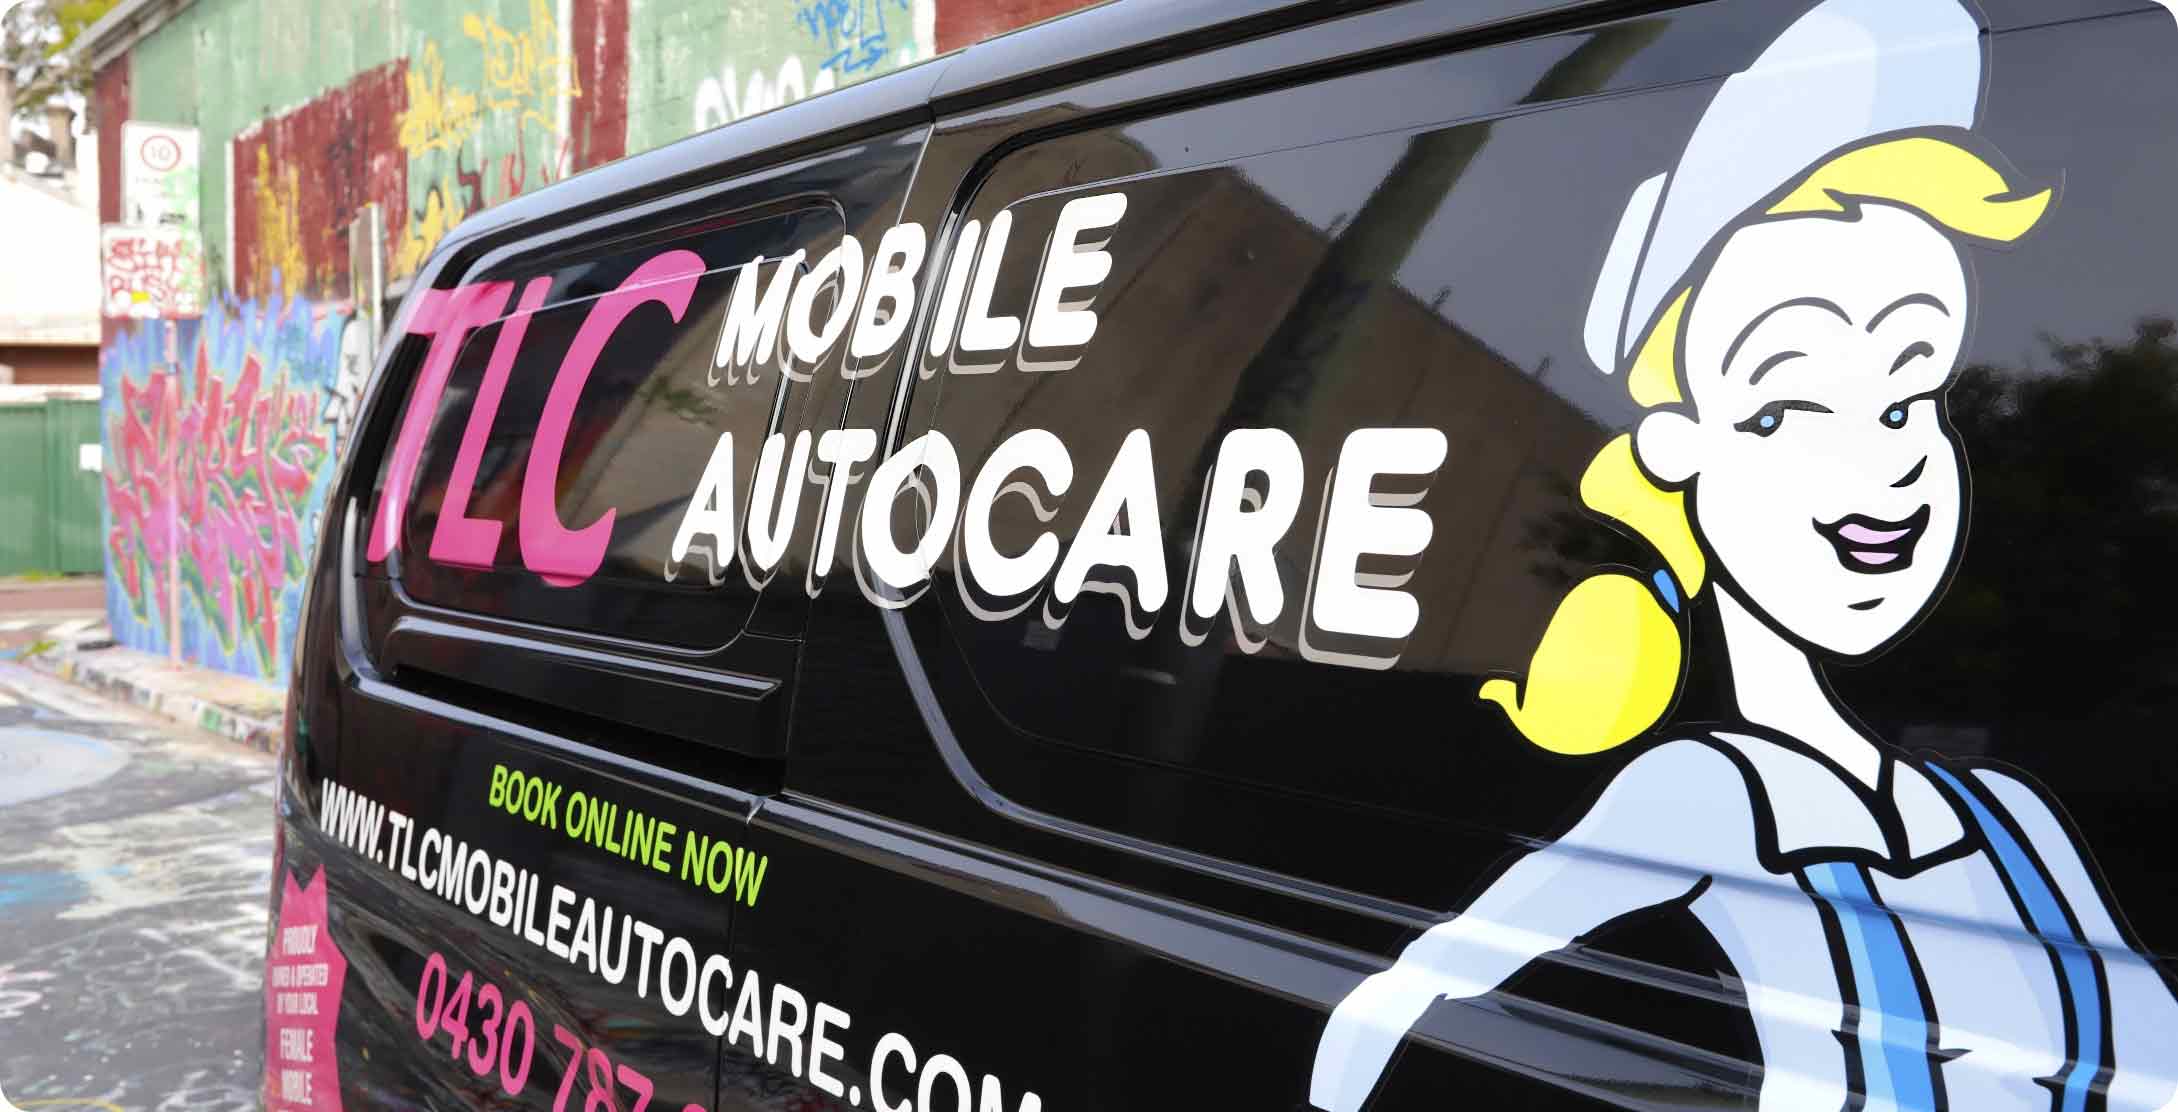 Mobile Auto Care Sydney